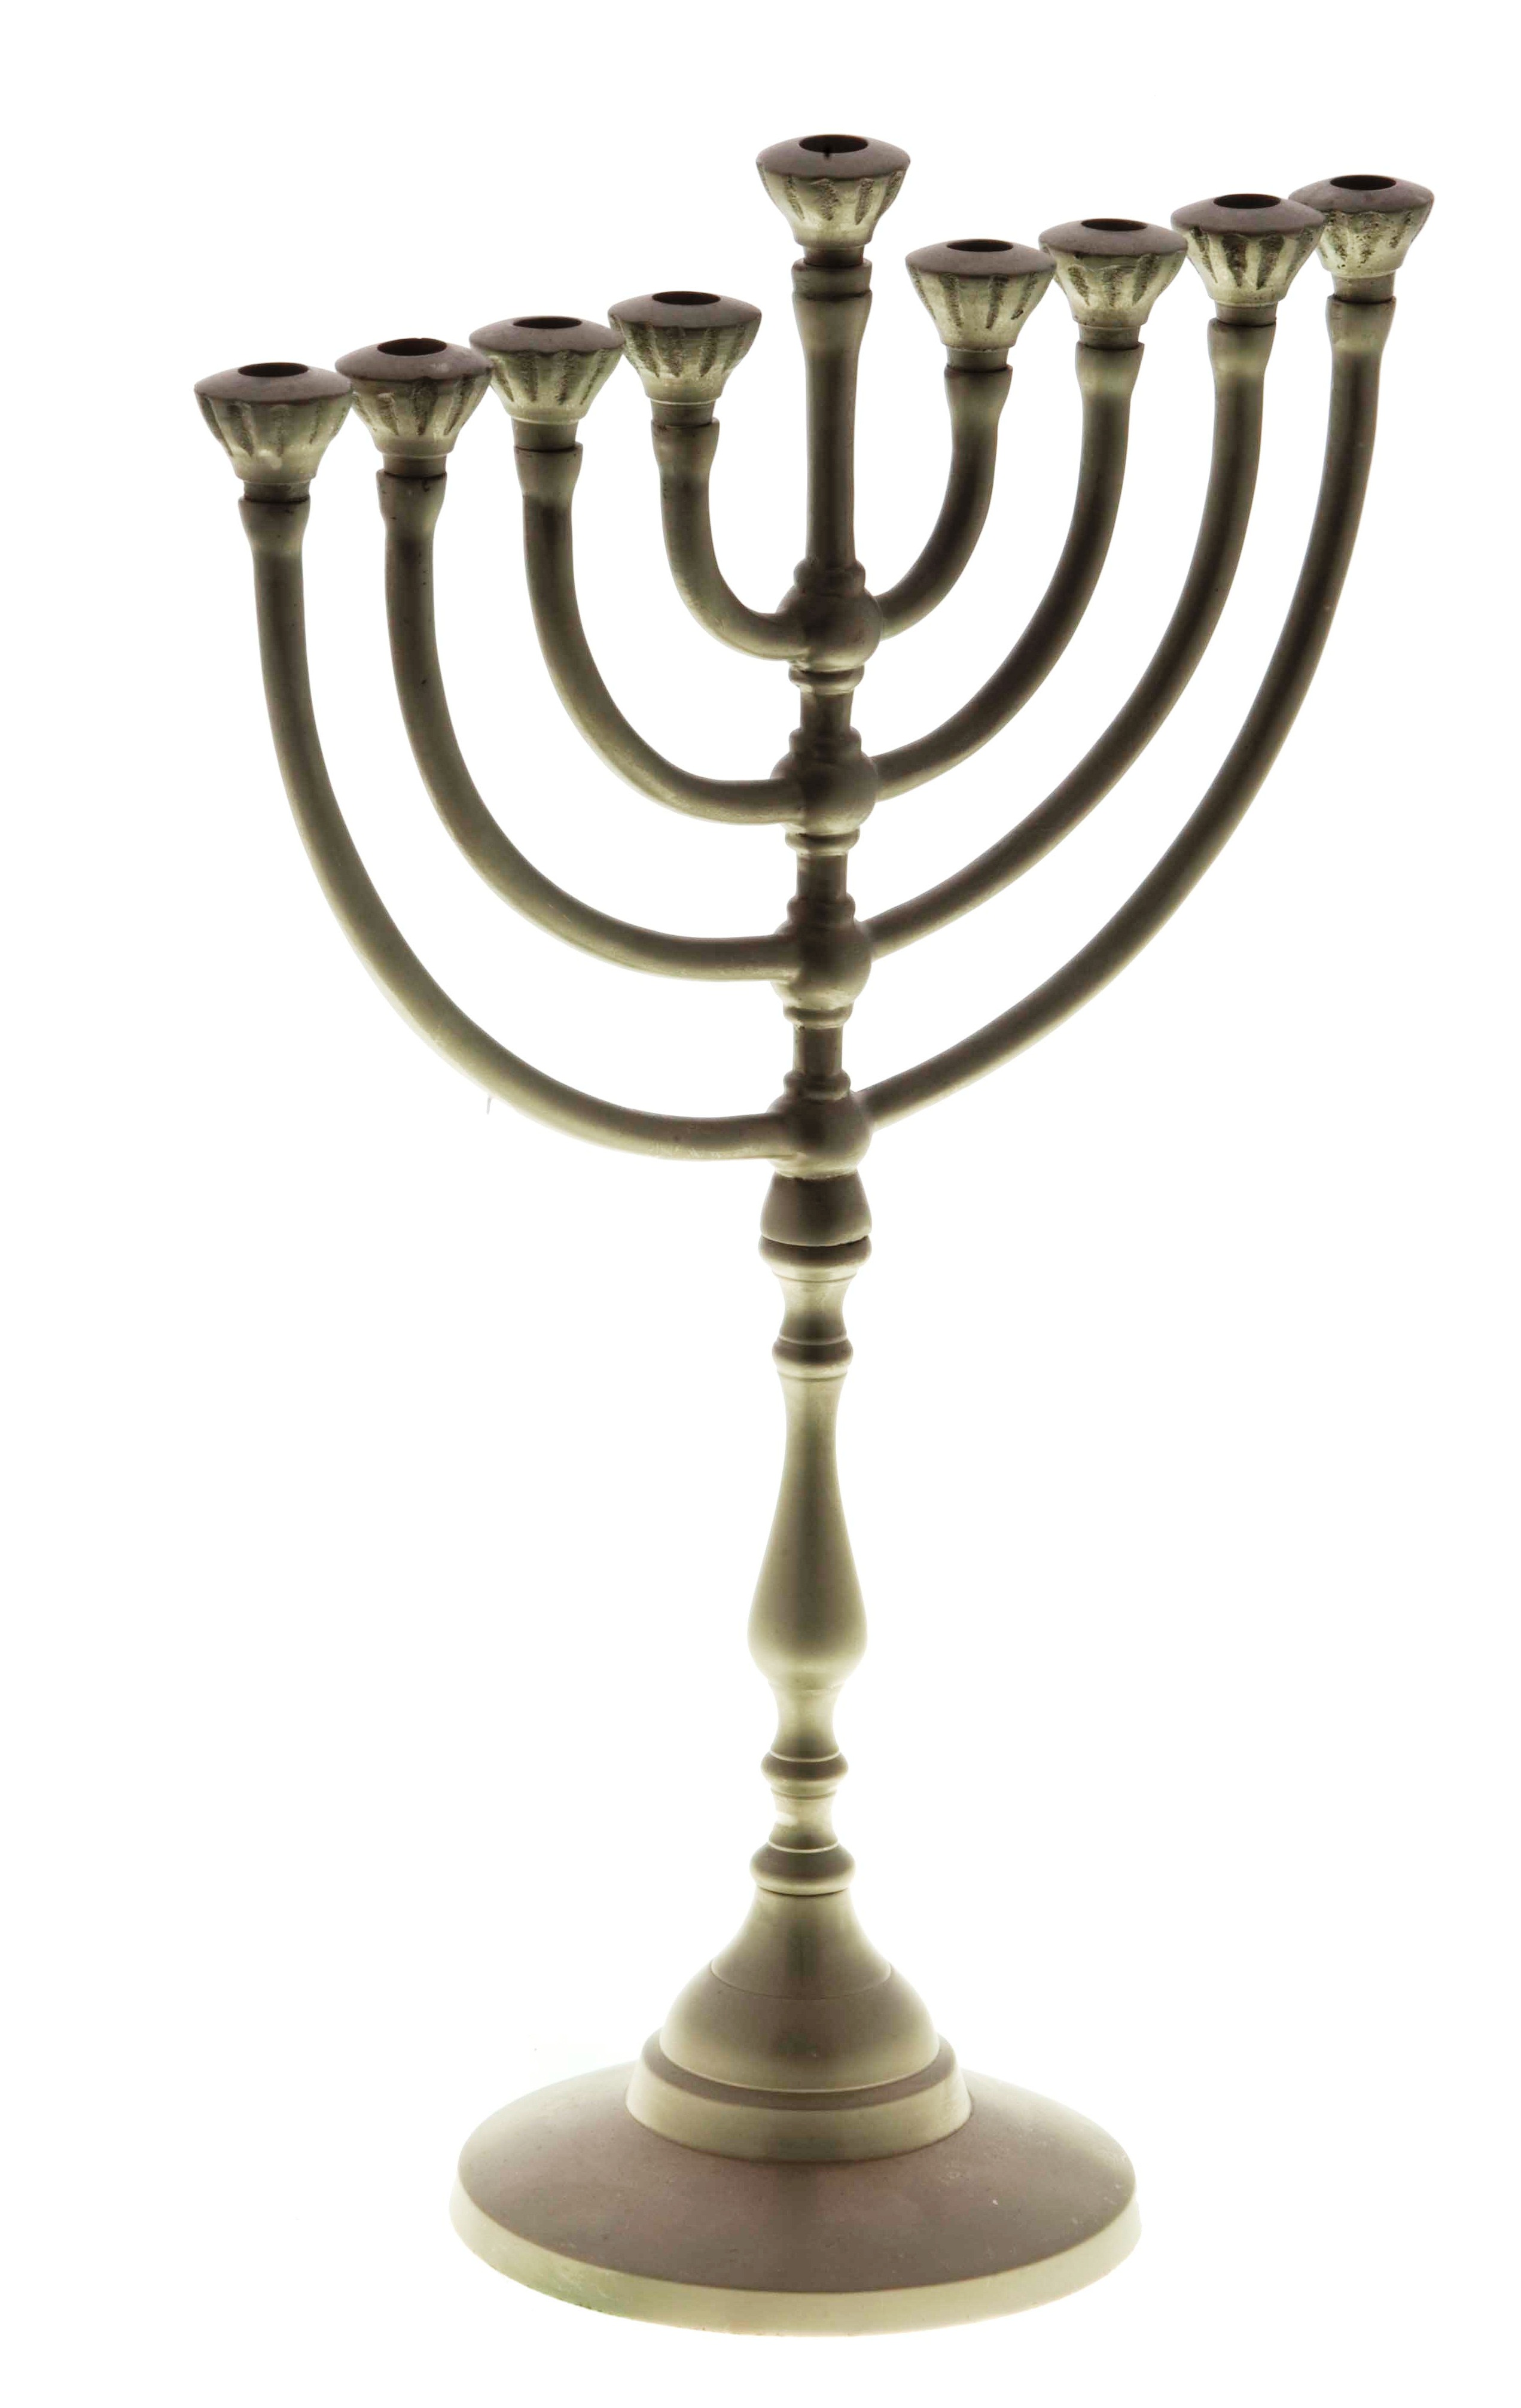 Pewter Hanukkah Menorah with Traditional Design